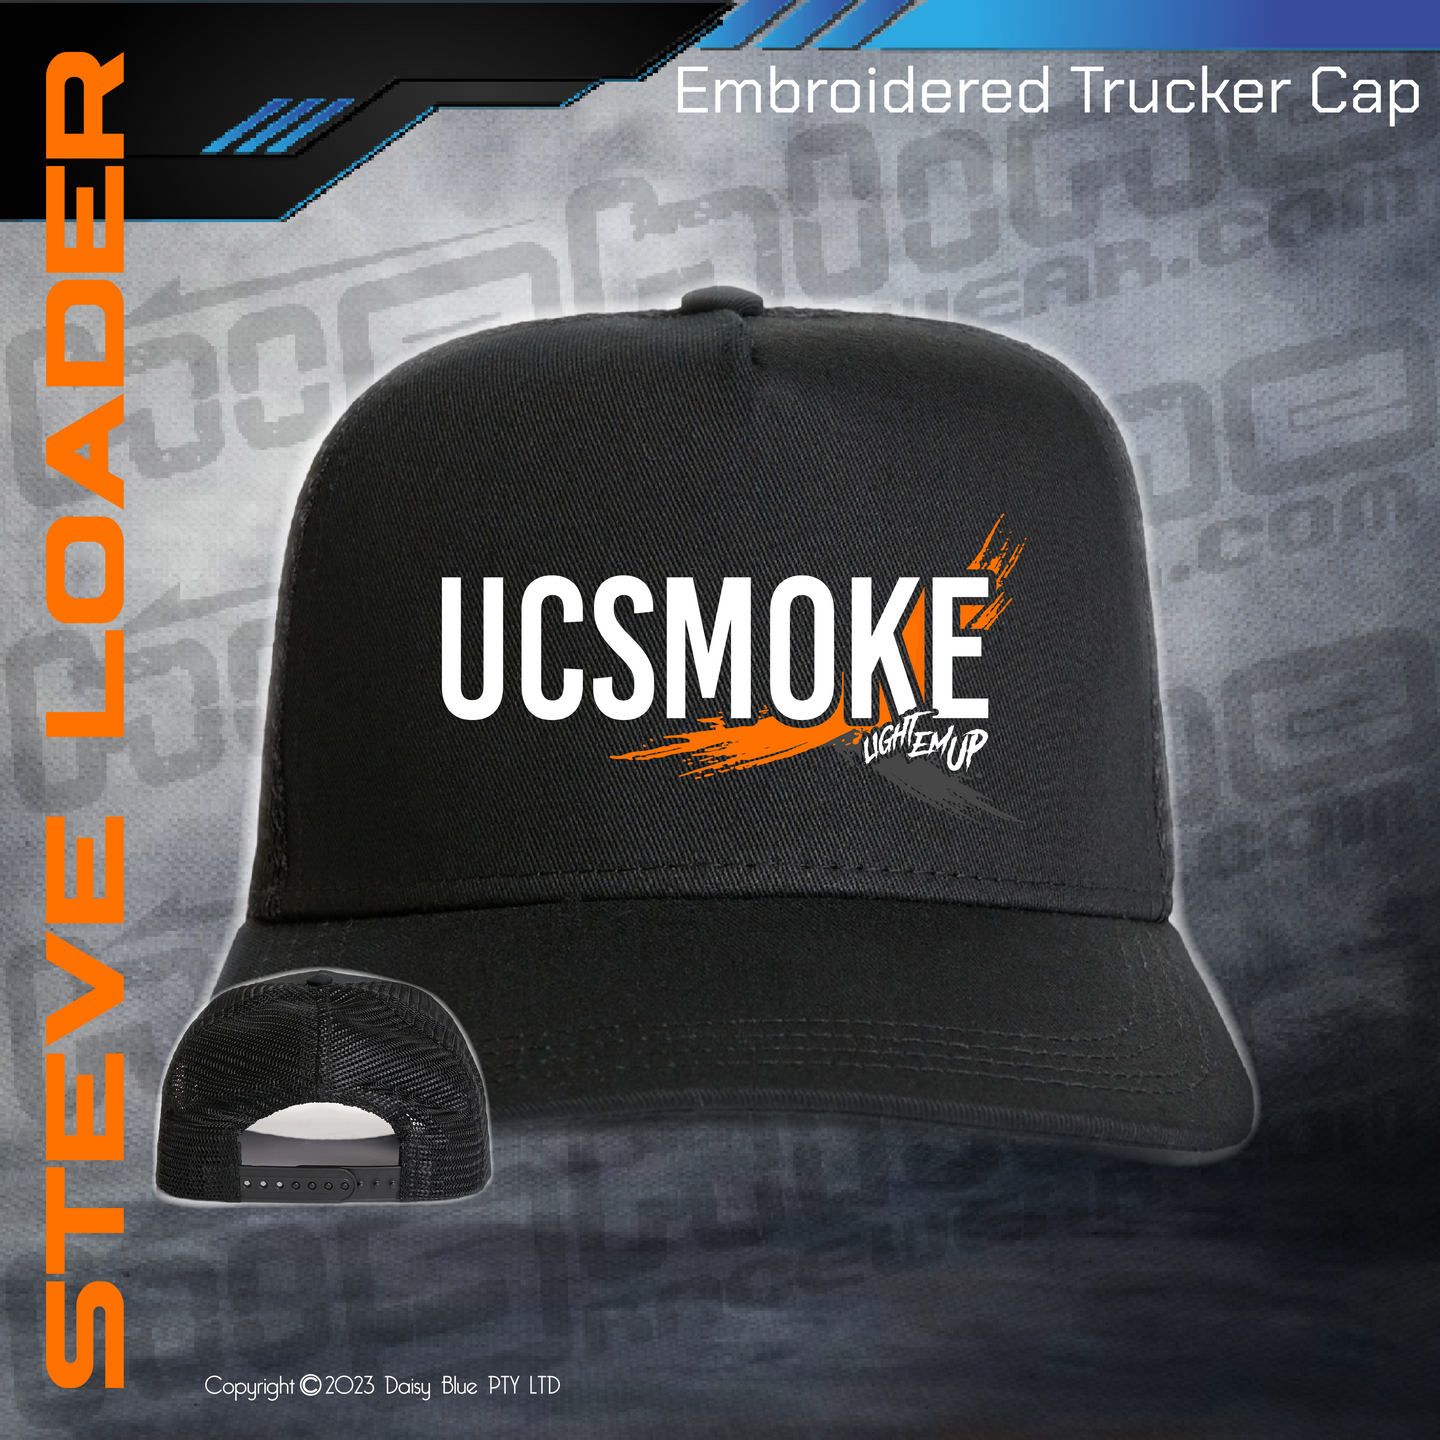 Embroidered Trucker Cap - UCSmoke Light Em Up